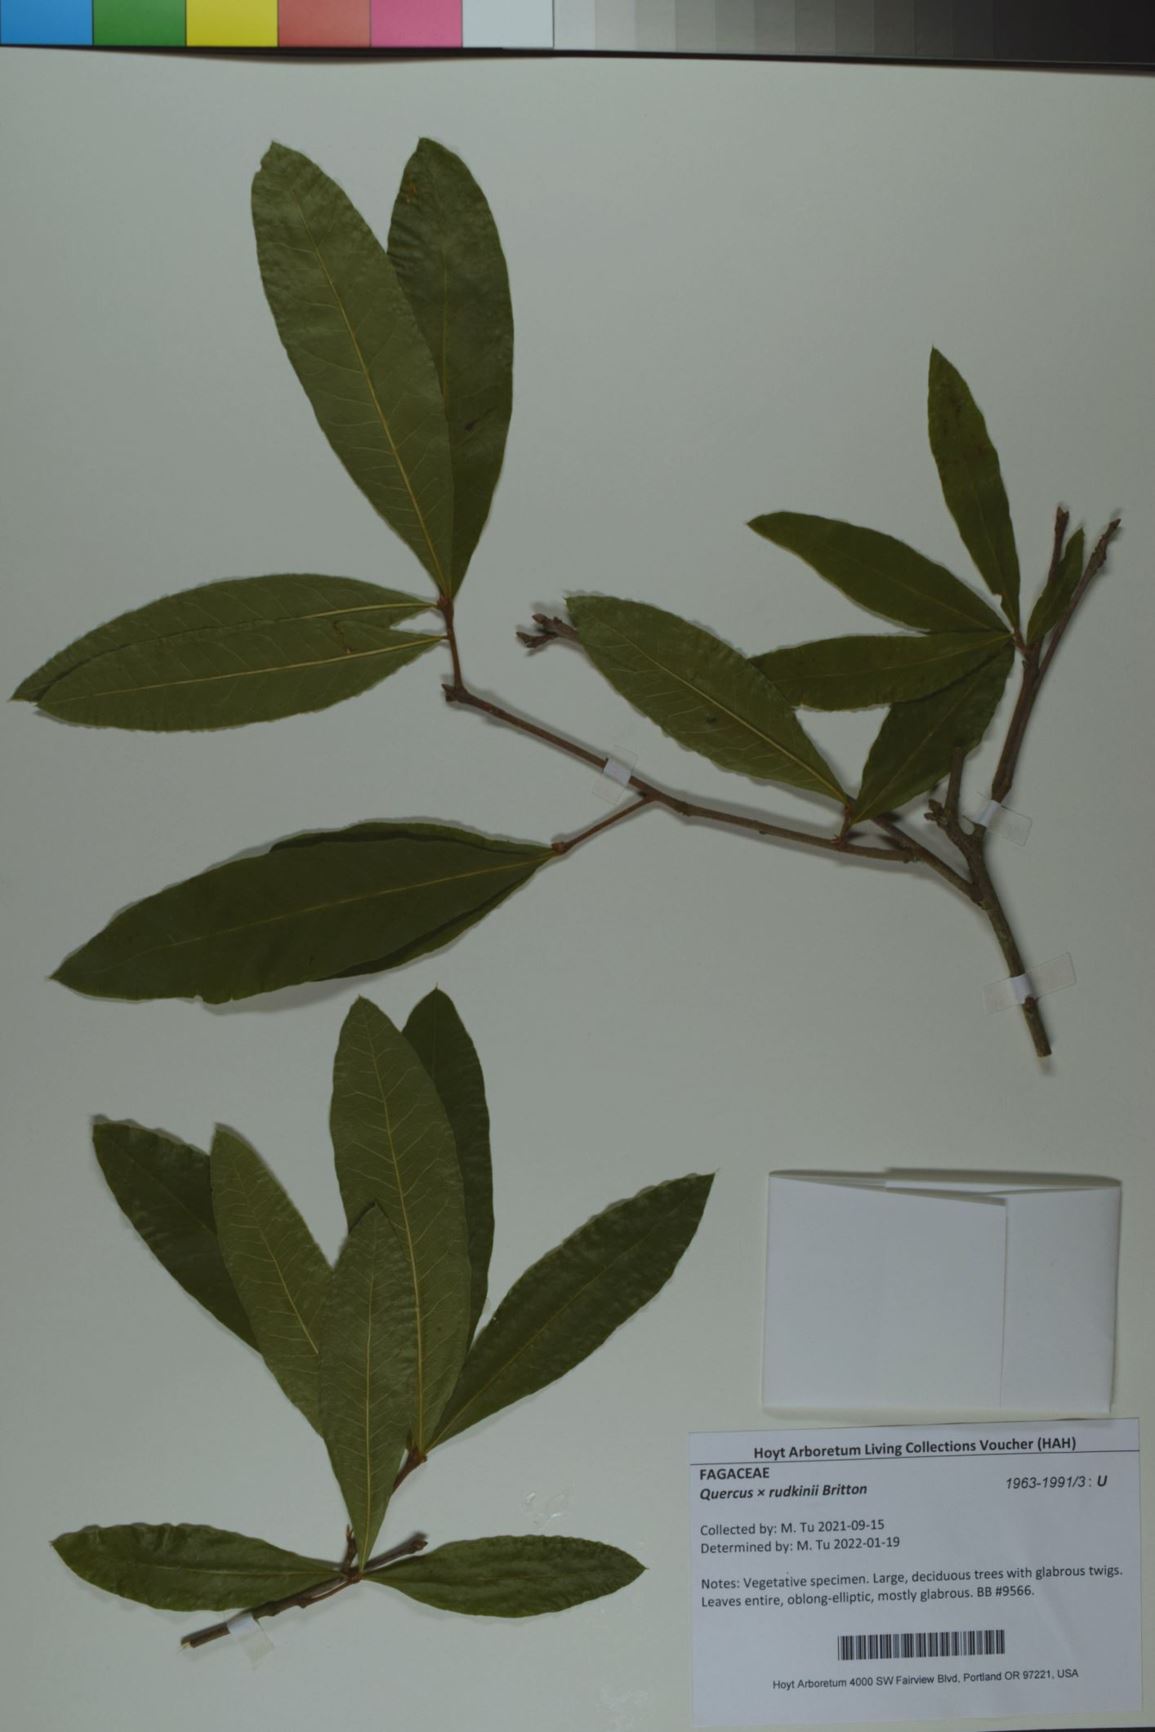 Quercus × rudkinii - Rudkin Oak